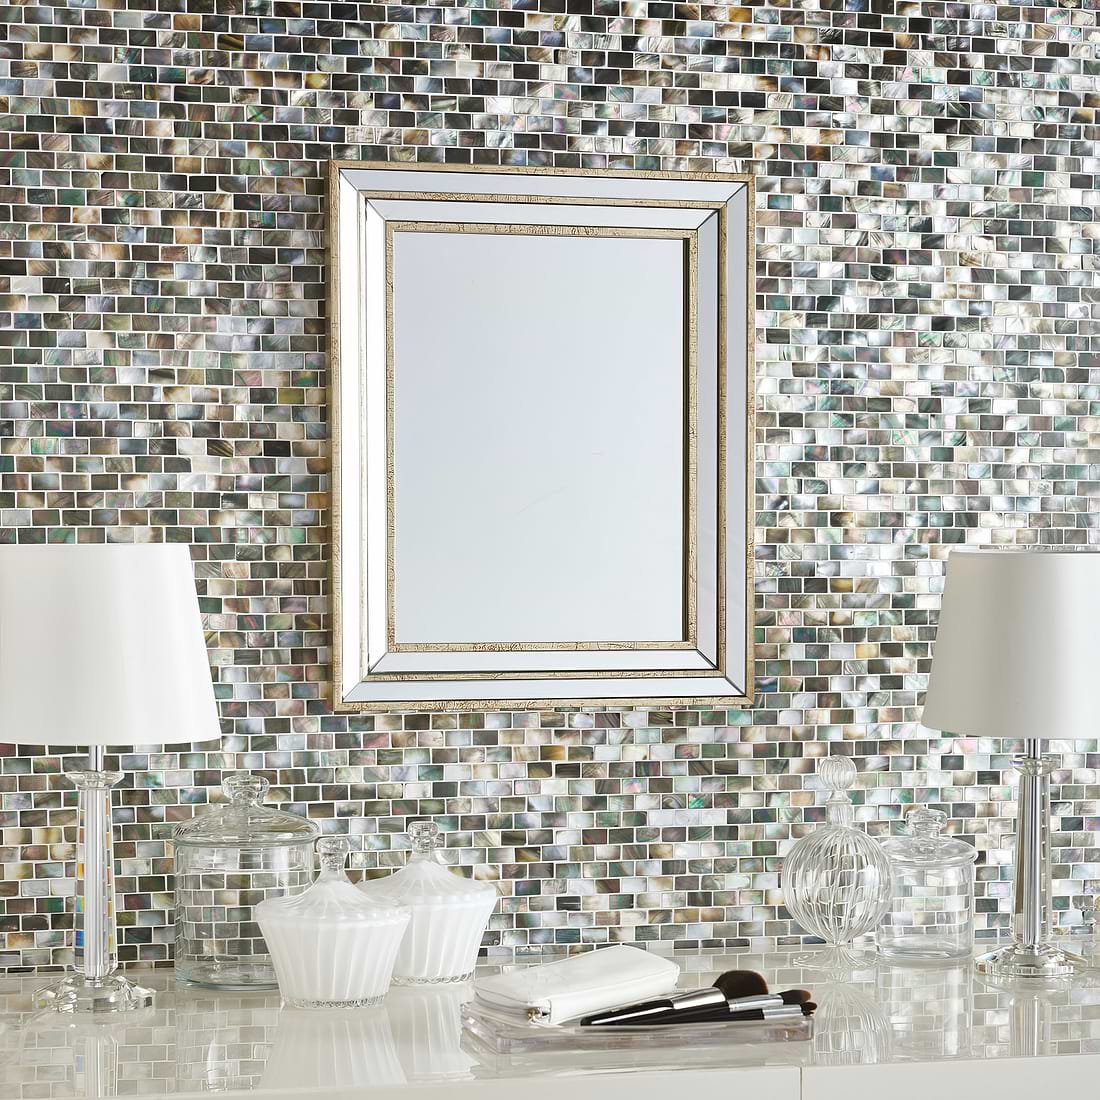 Mother of Pearl Dark Brickbond Shell Mosaic - Hyperion Tiles